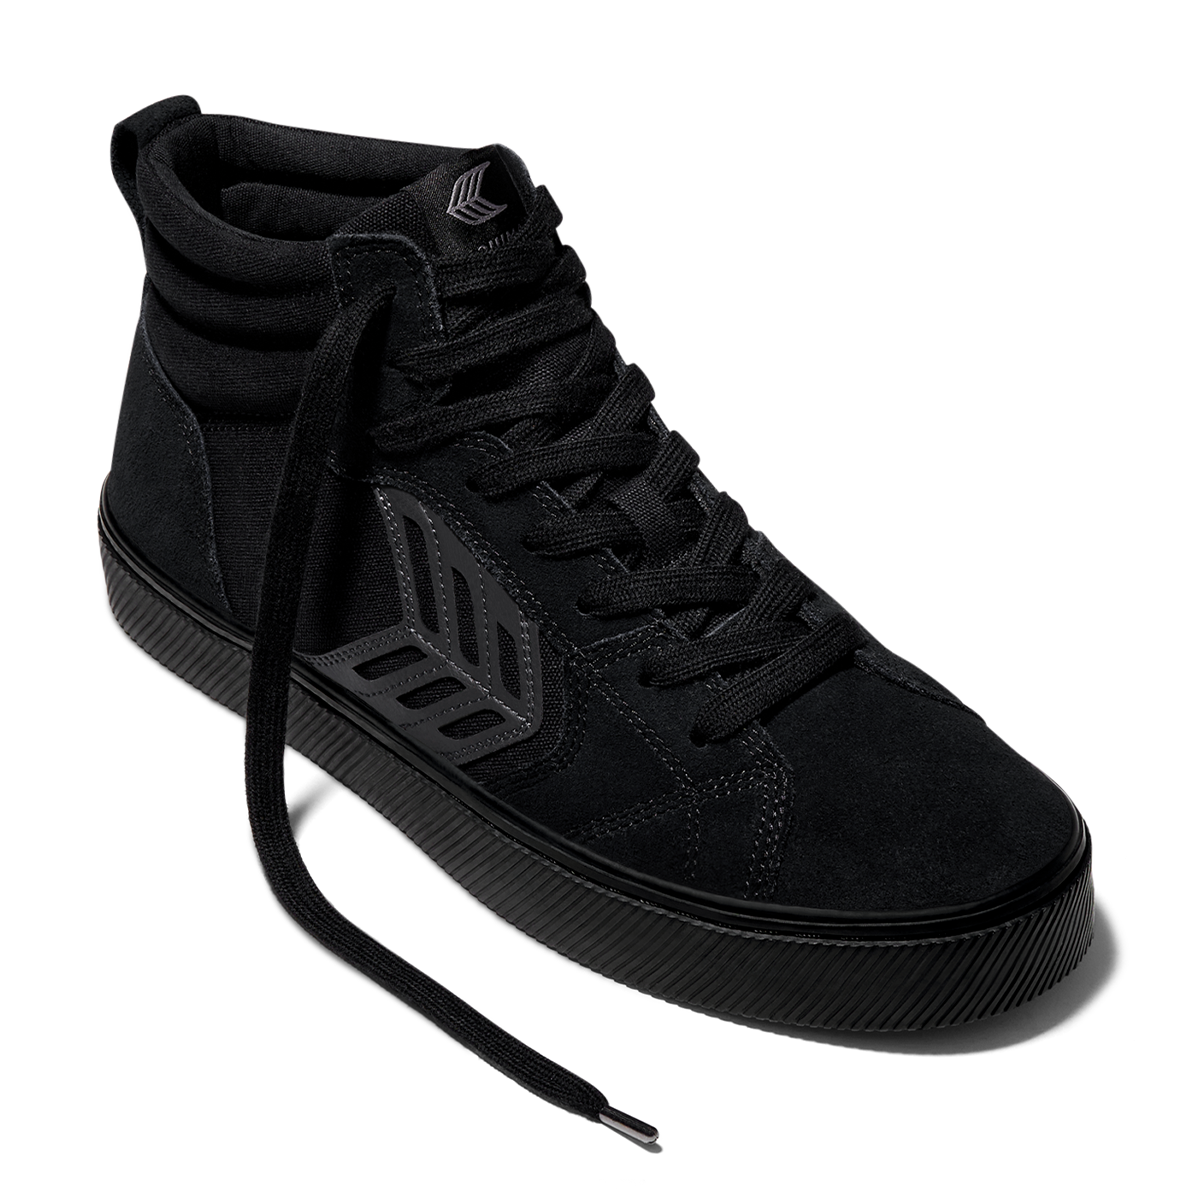 Chaussures Catiba Pro High | Cariuma